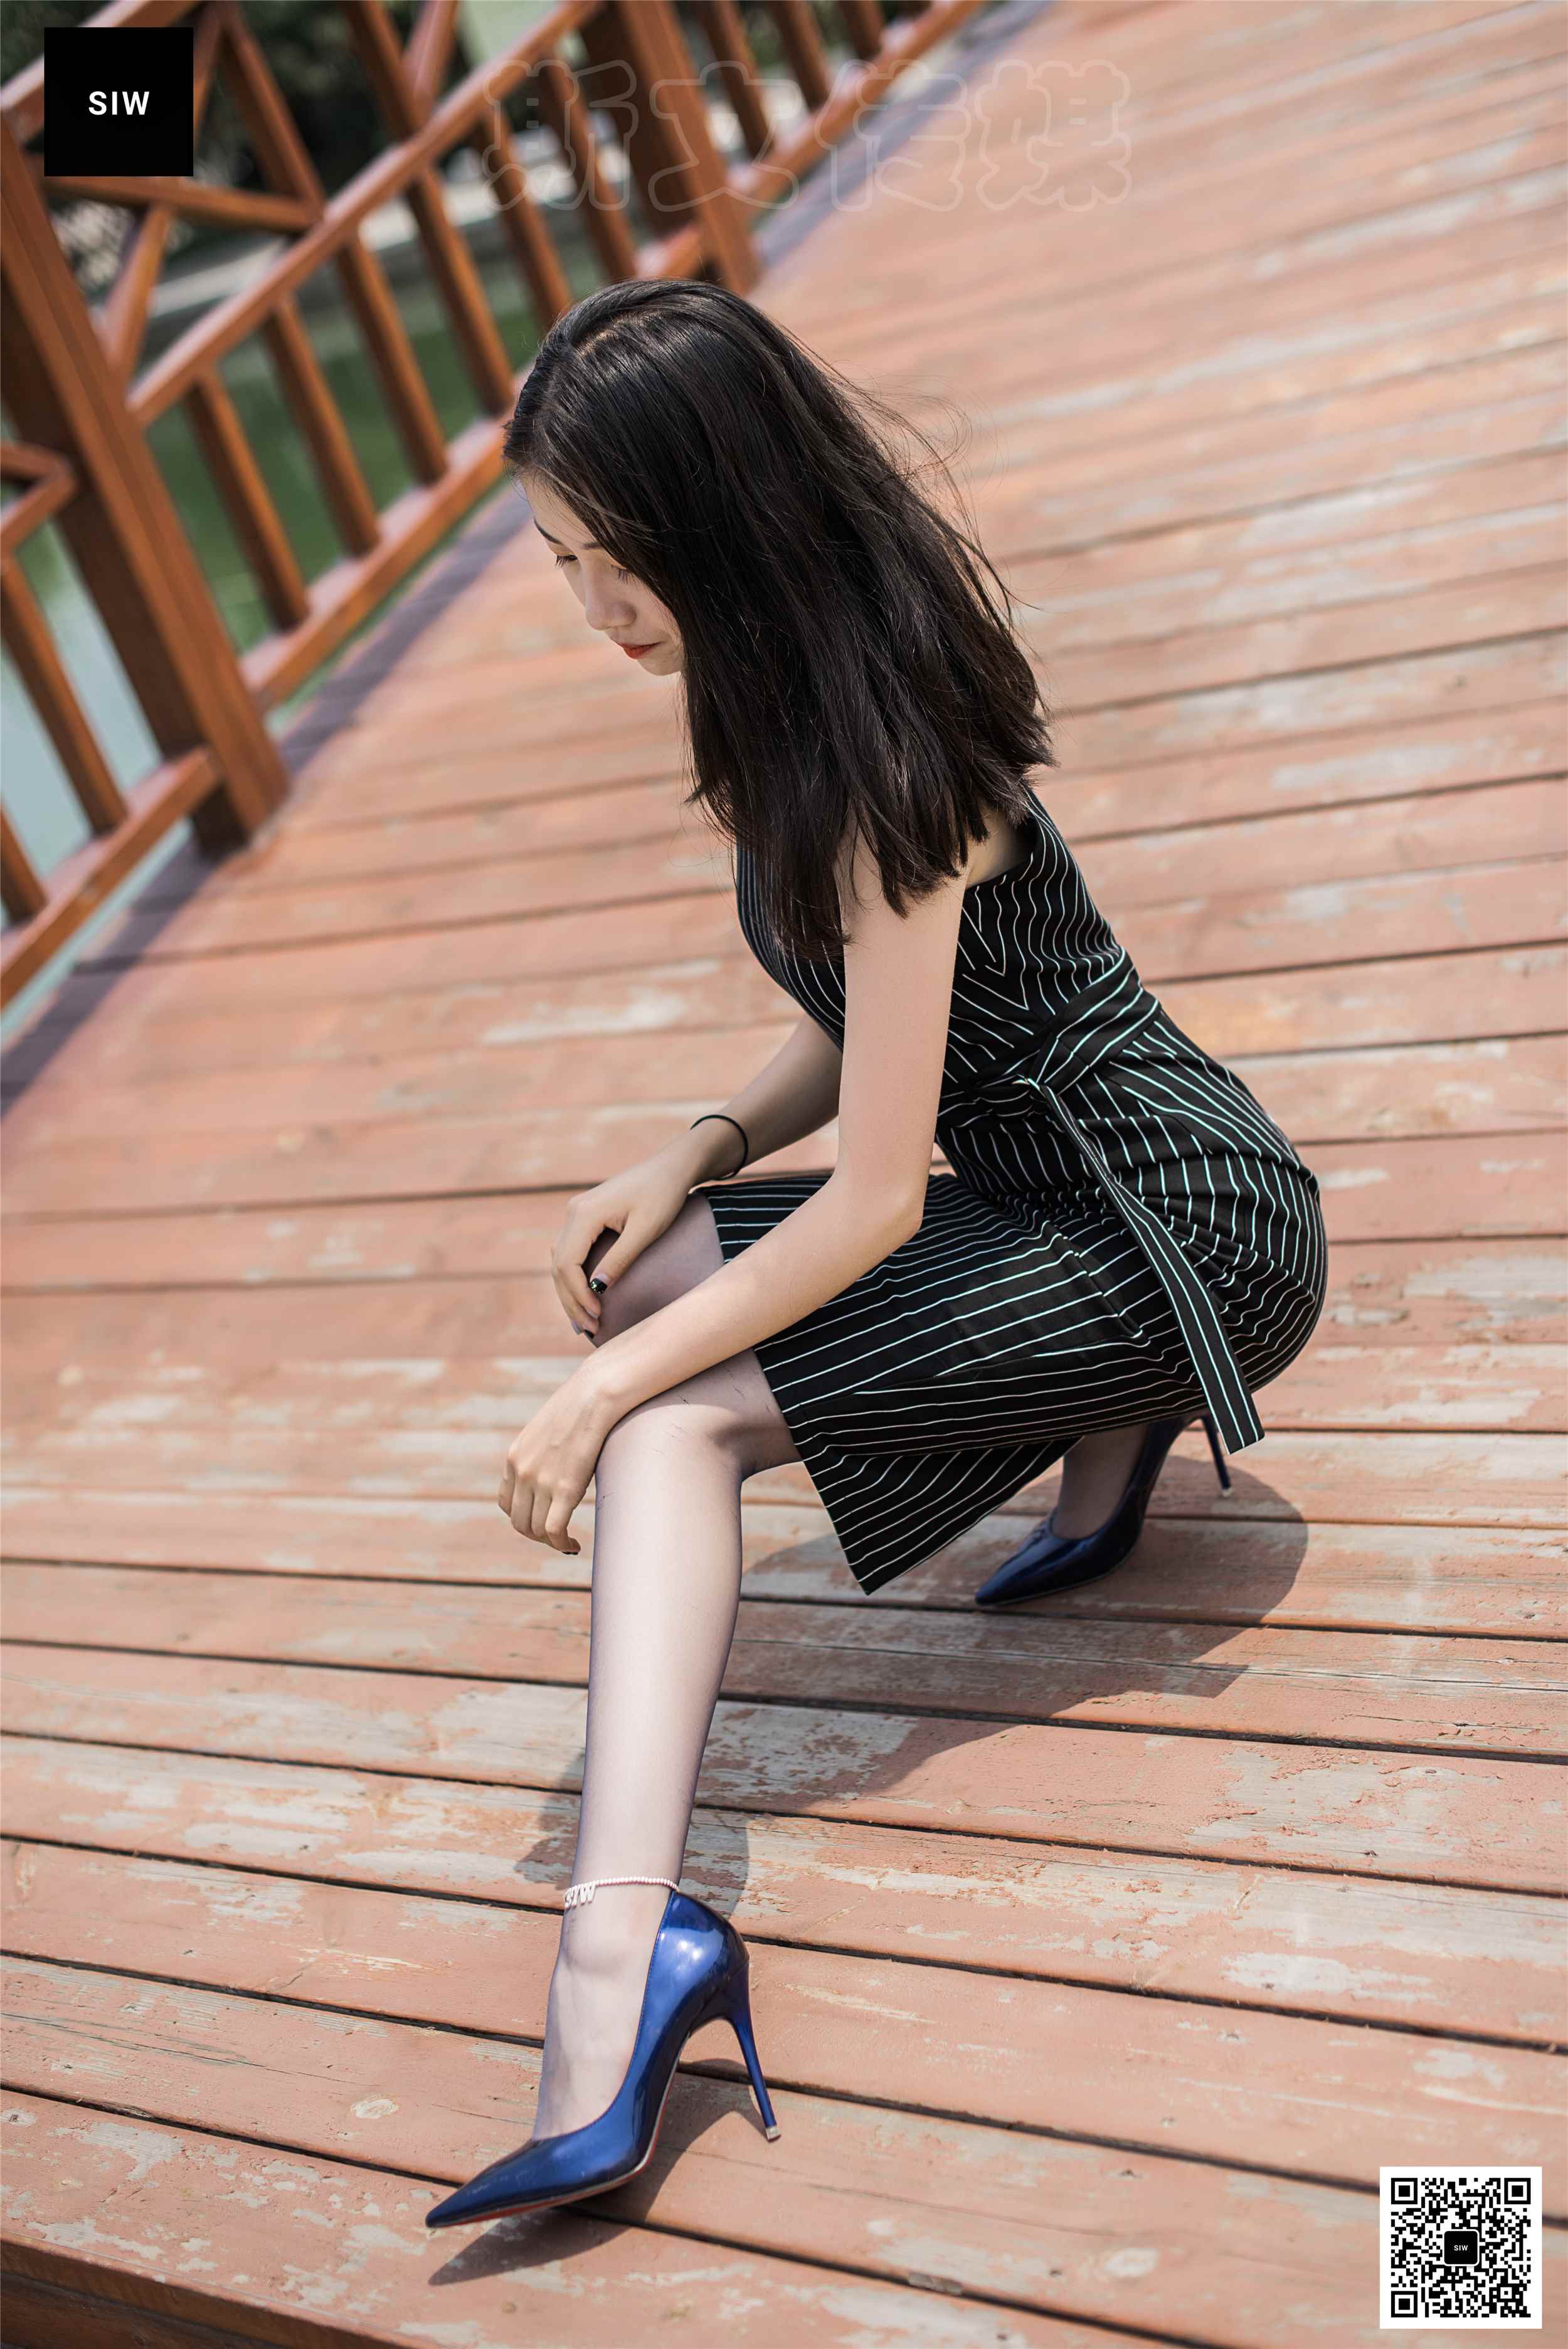 China Beauty Legs and feet 48